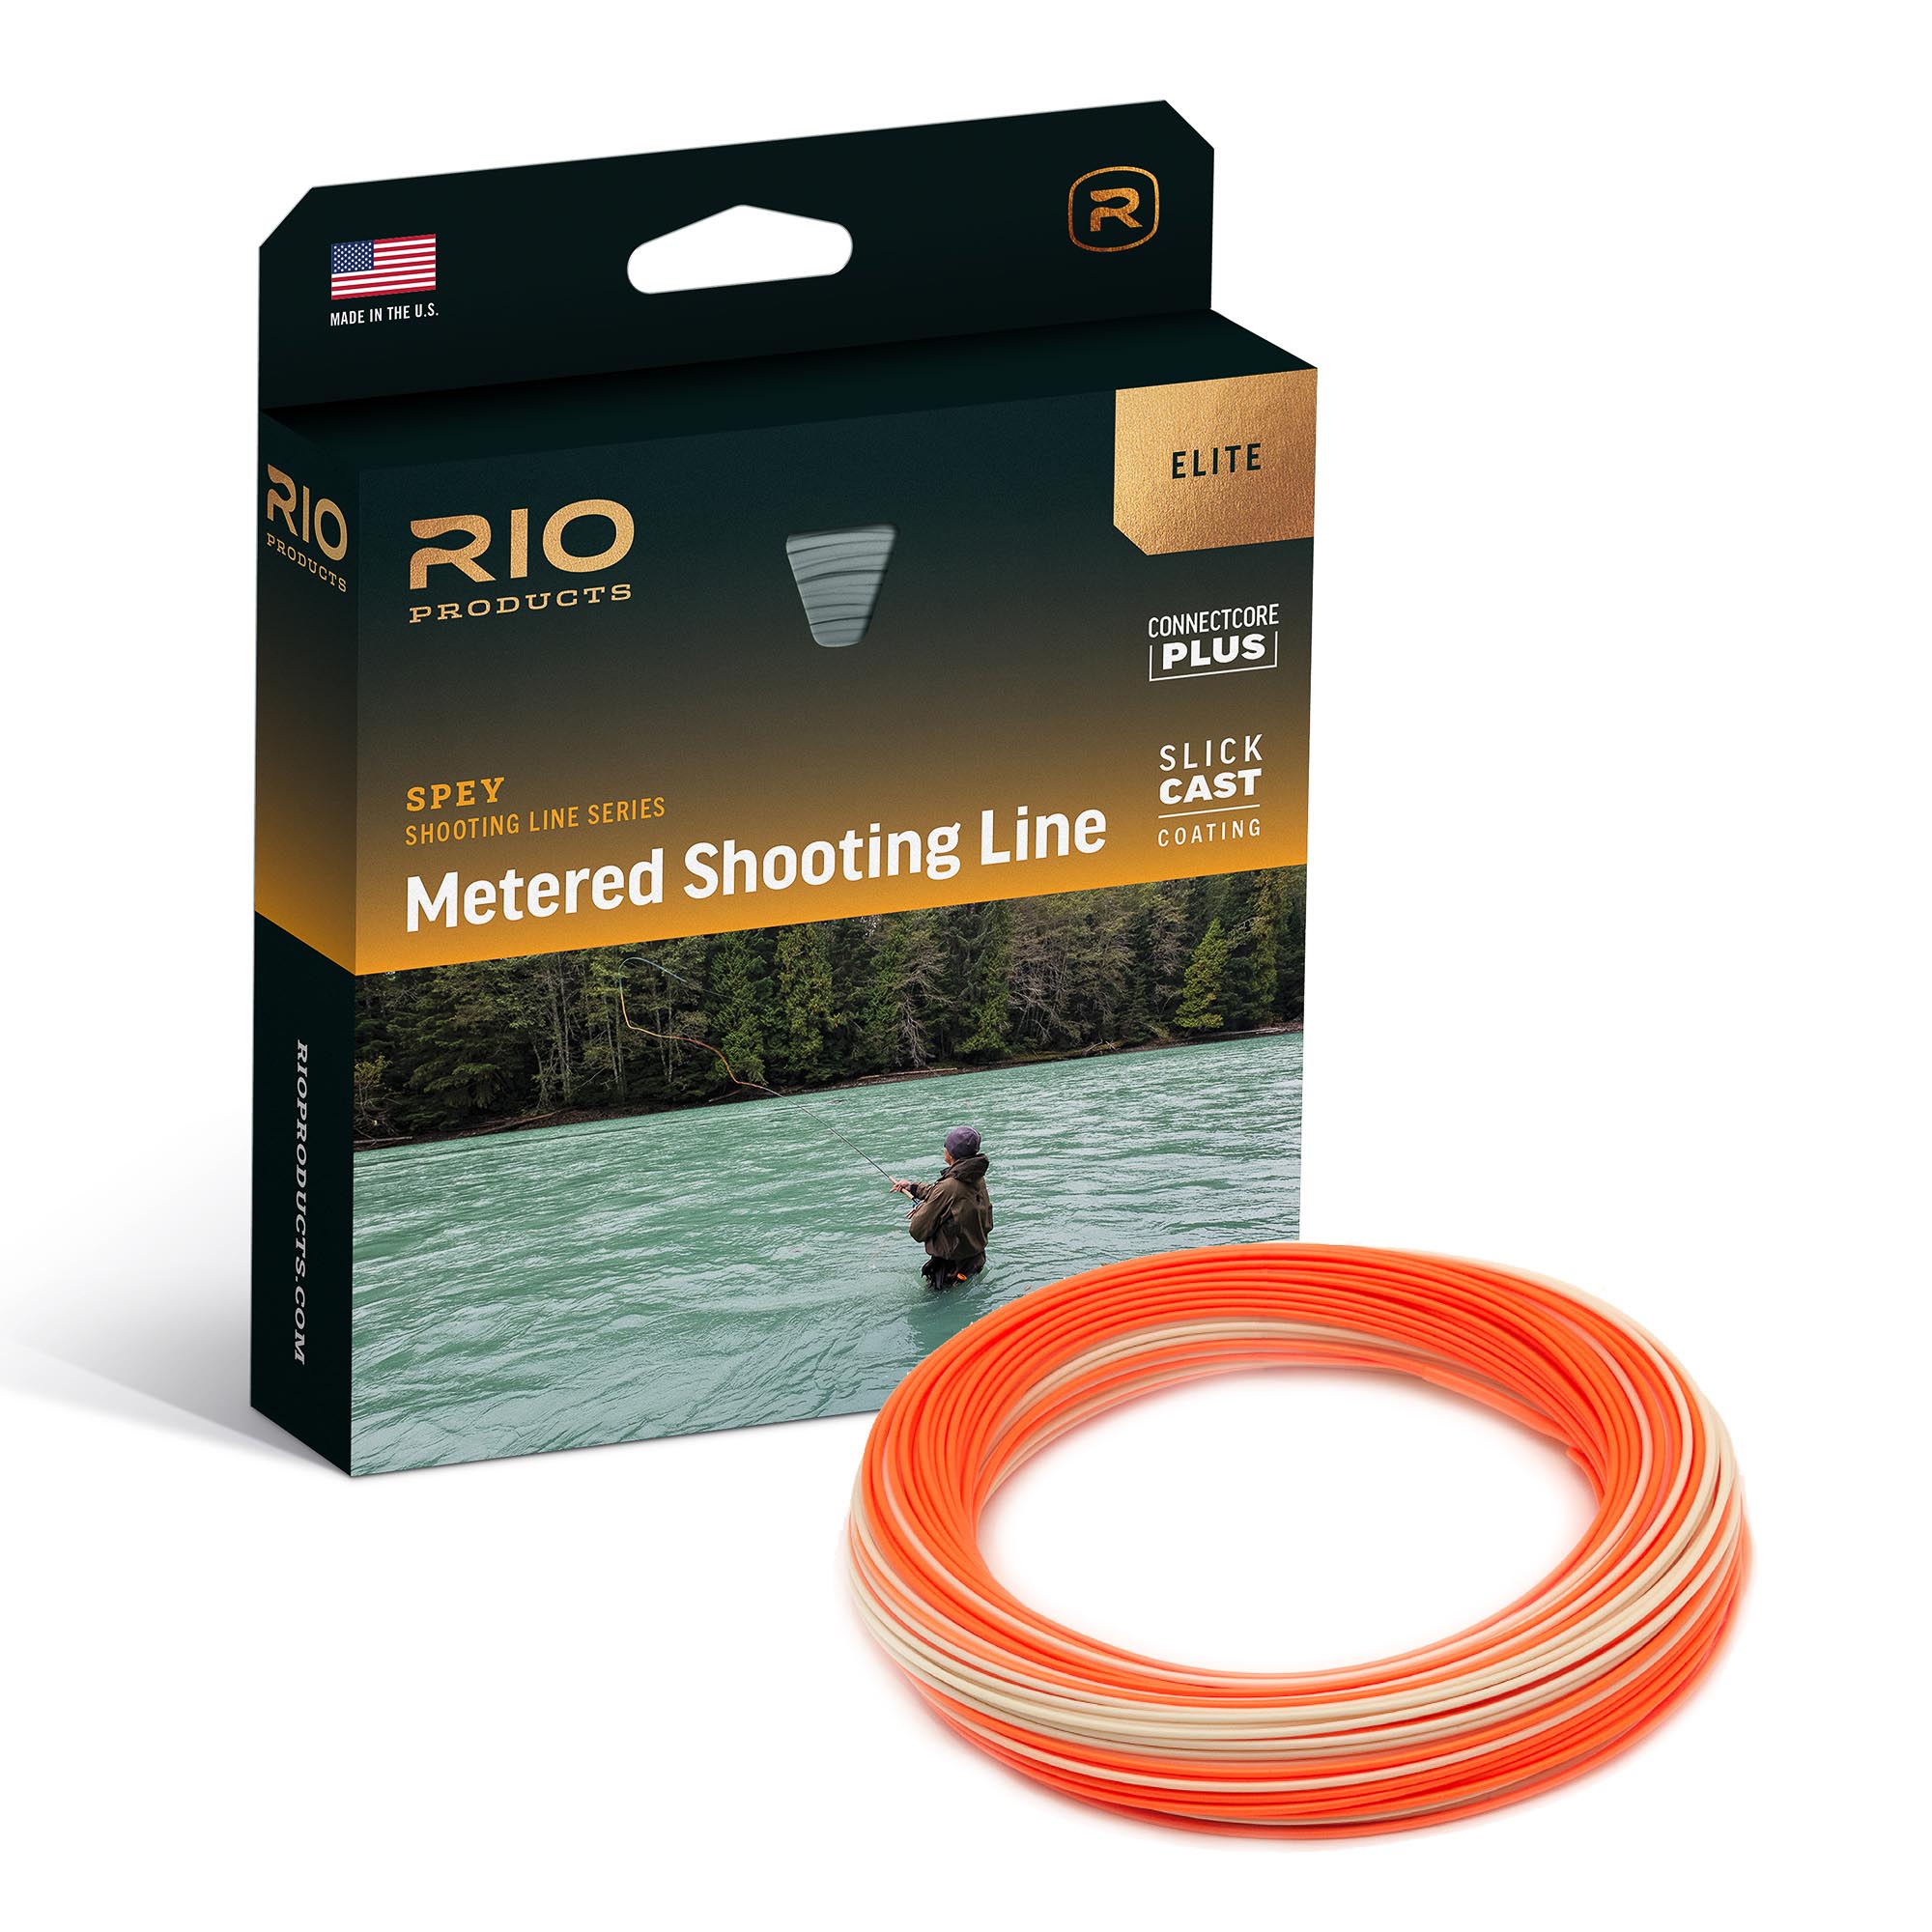 RIO Elite Metered Shooting Line – Guide Flyfishing